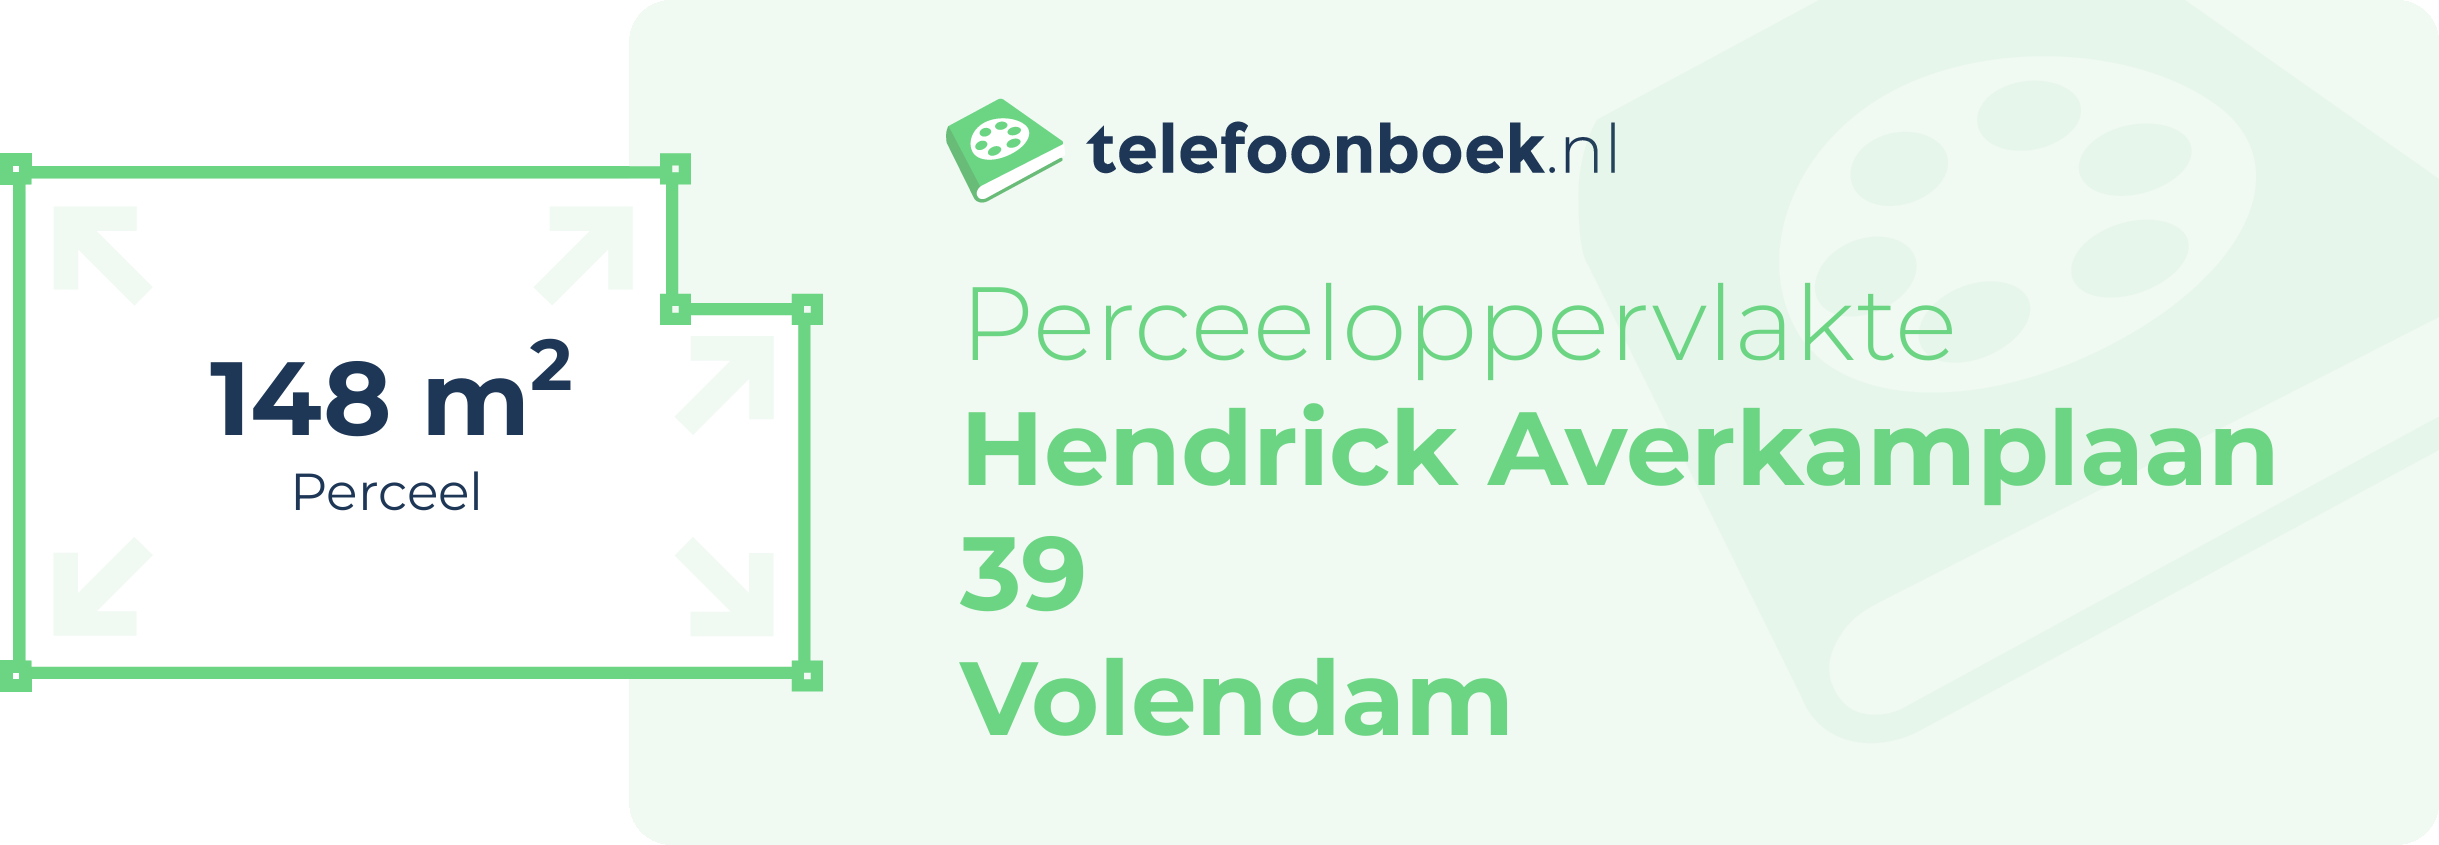 Perceeloppervlakte Hendrick Averkamplaan 39 Volendam